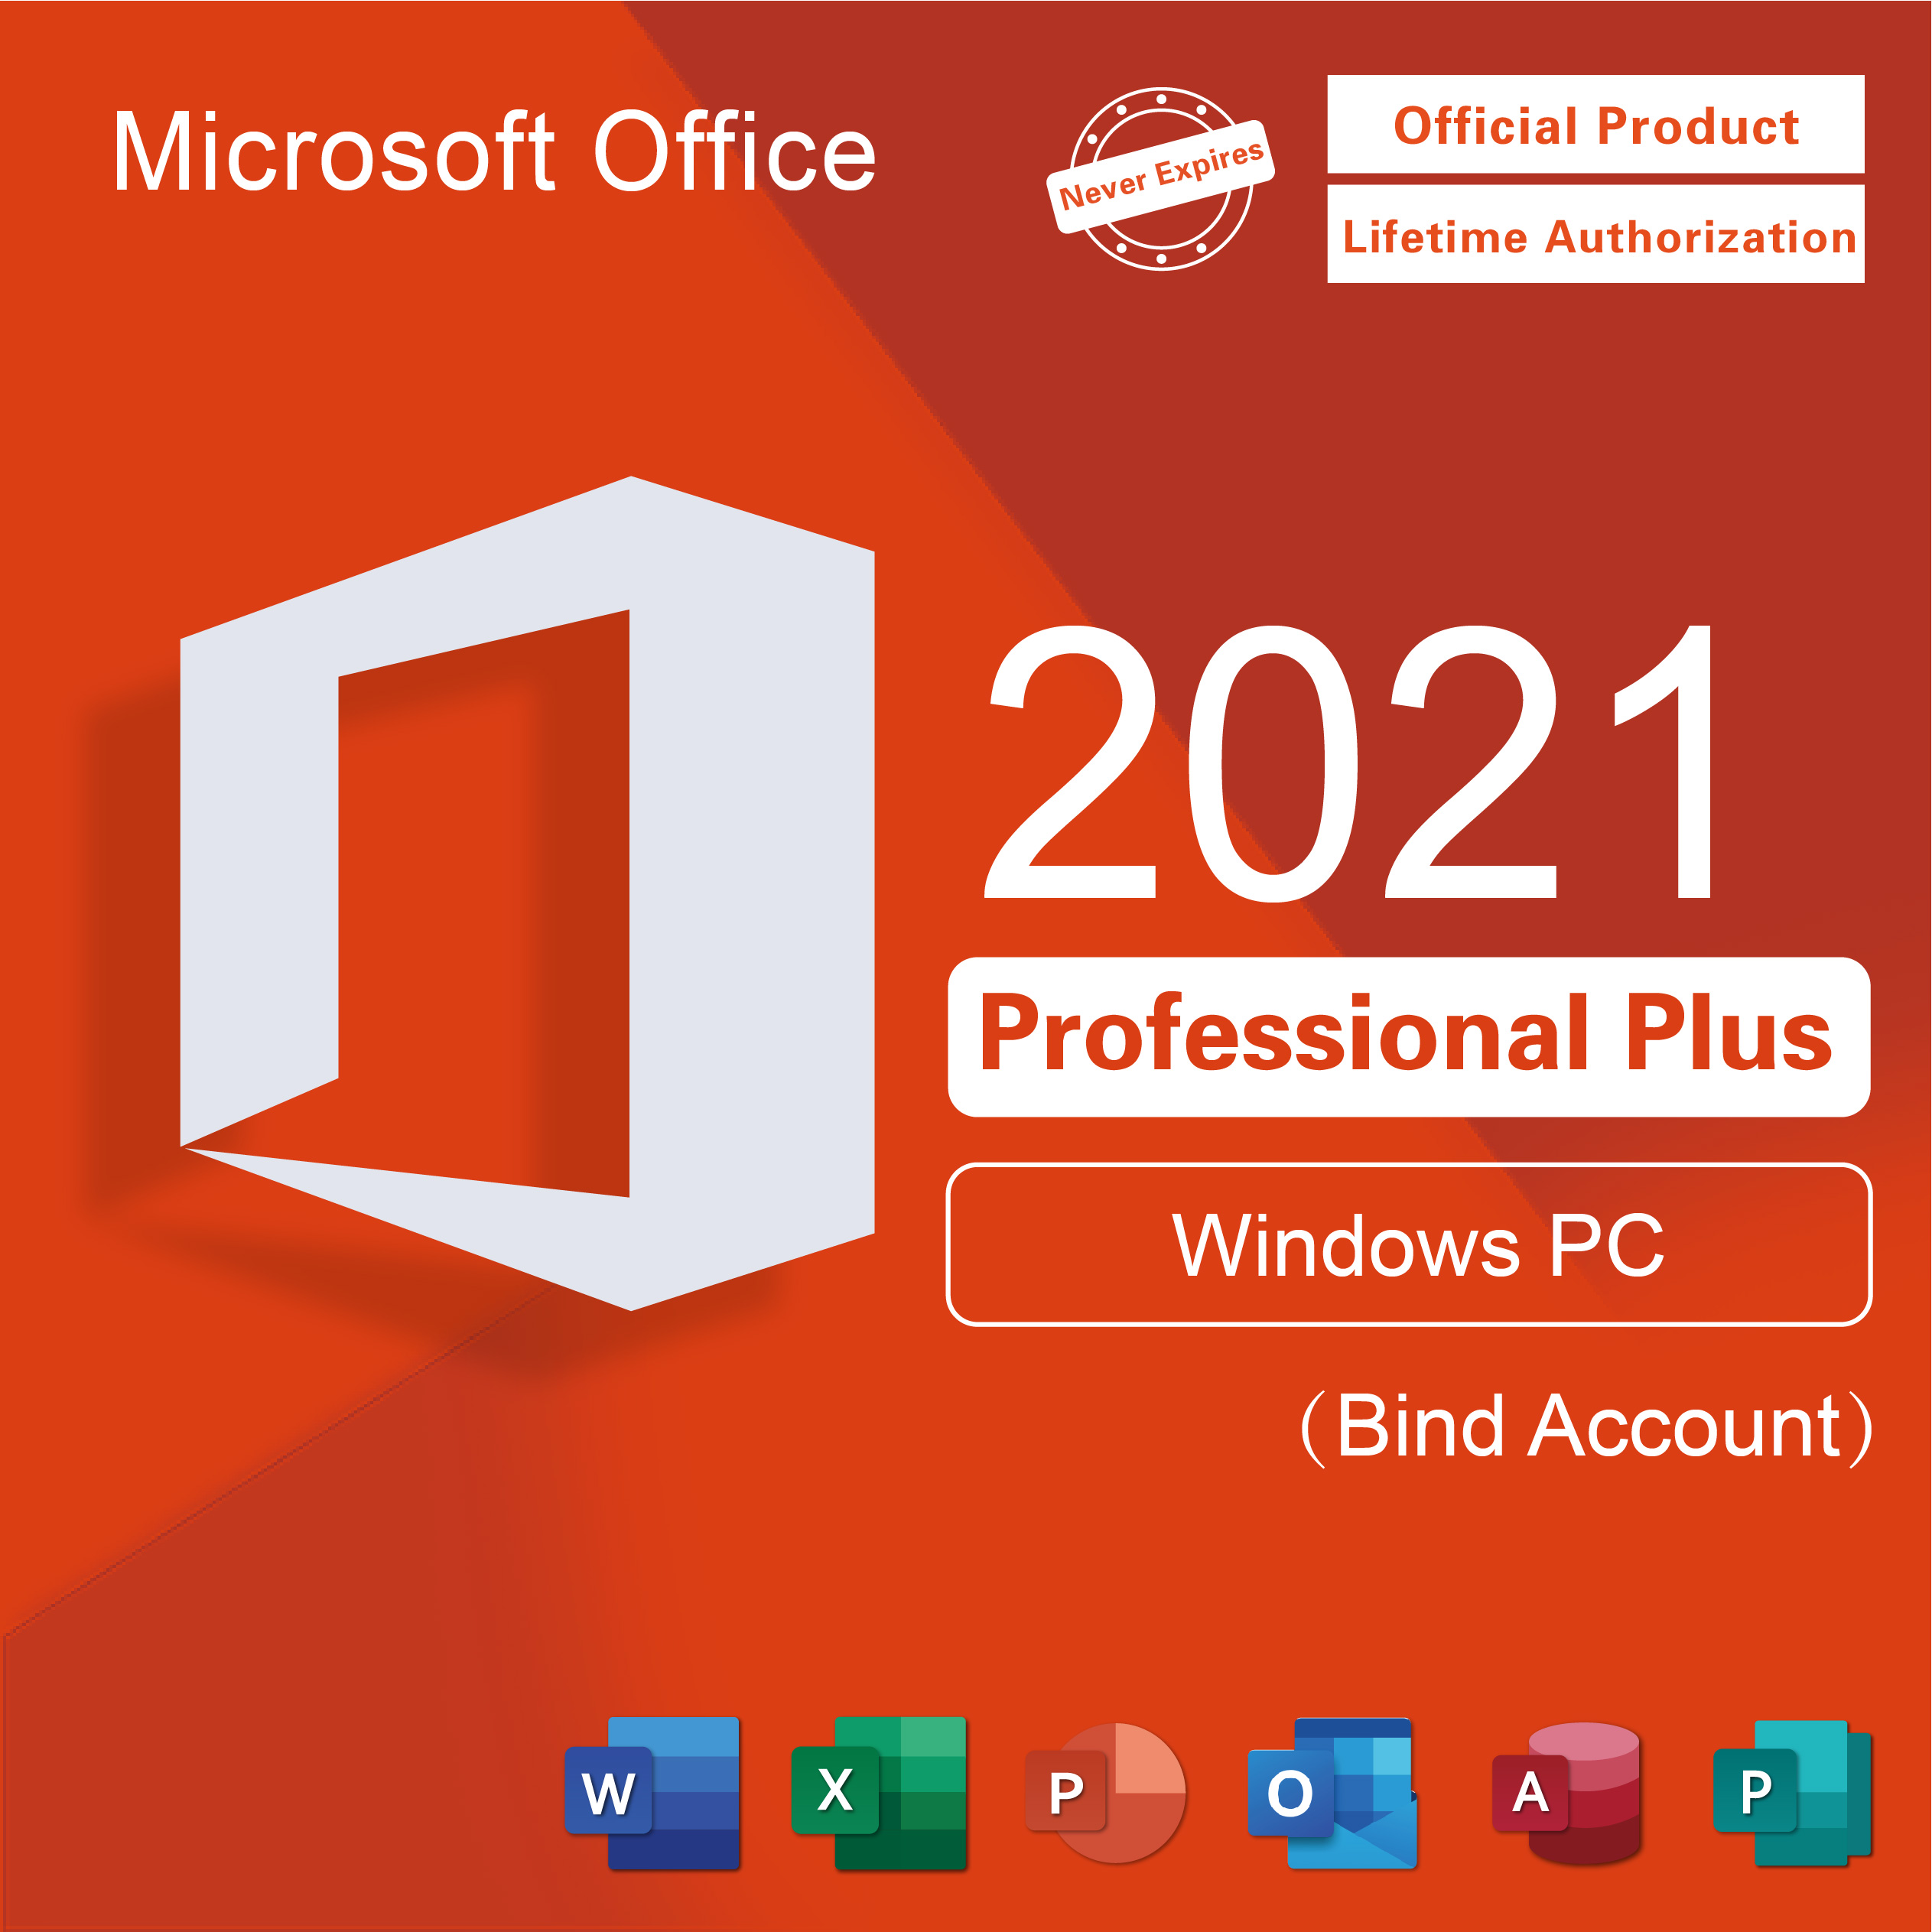 Microsoft Office 2021 Professional Plus (Bind Account)